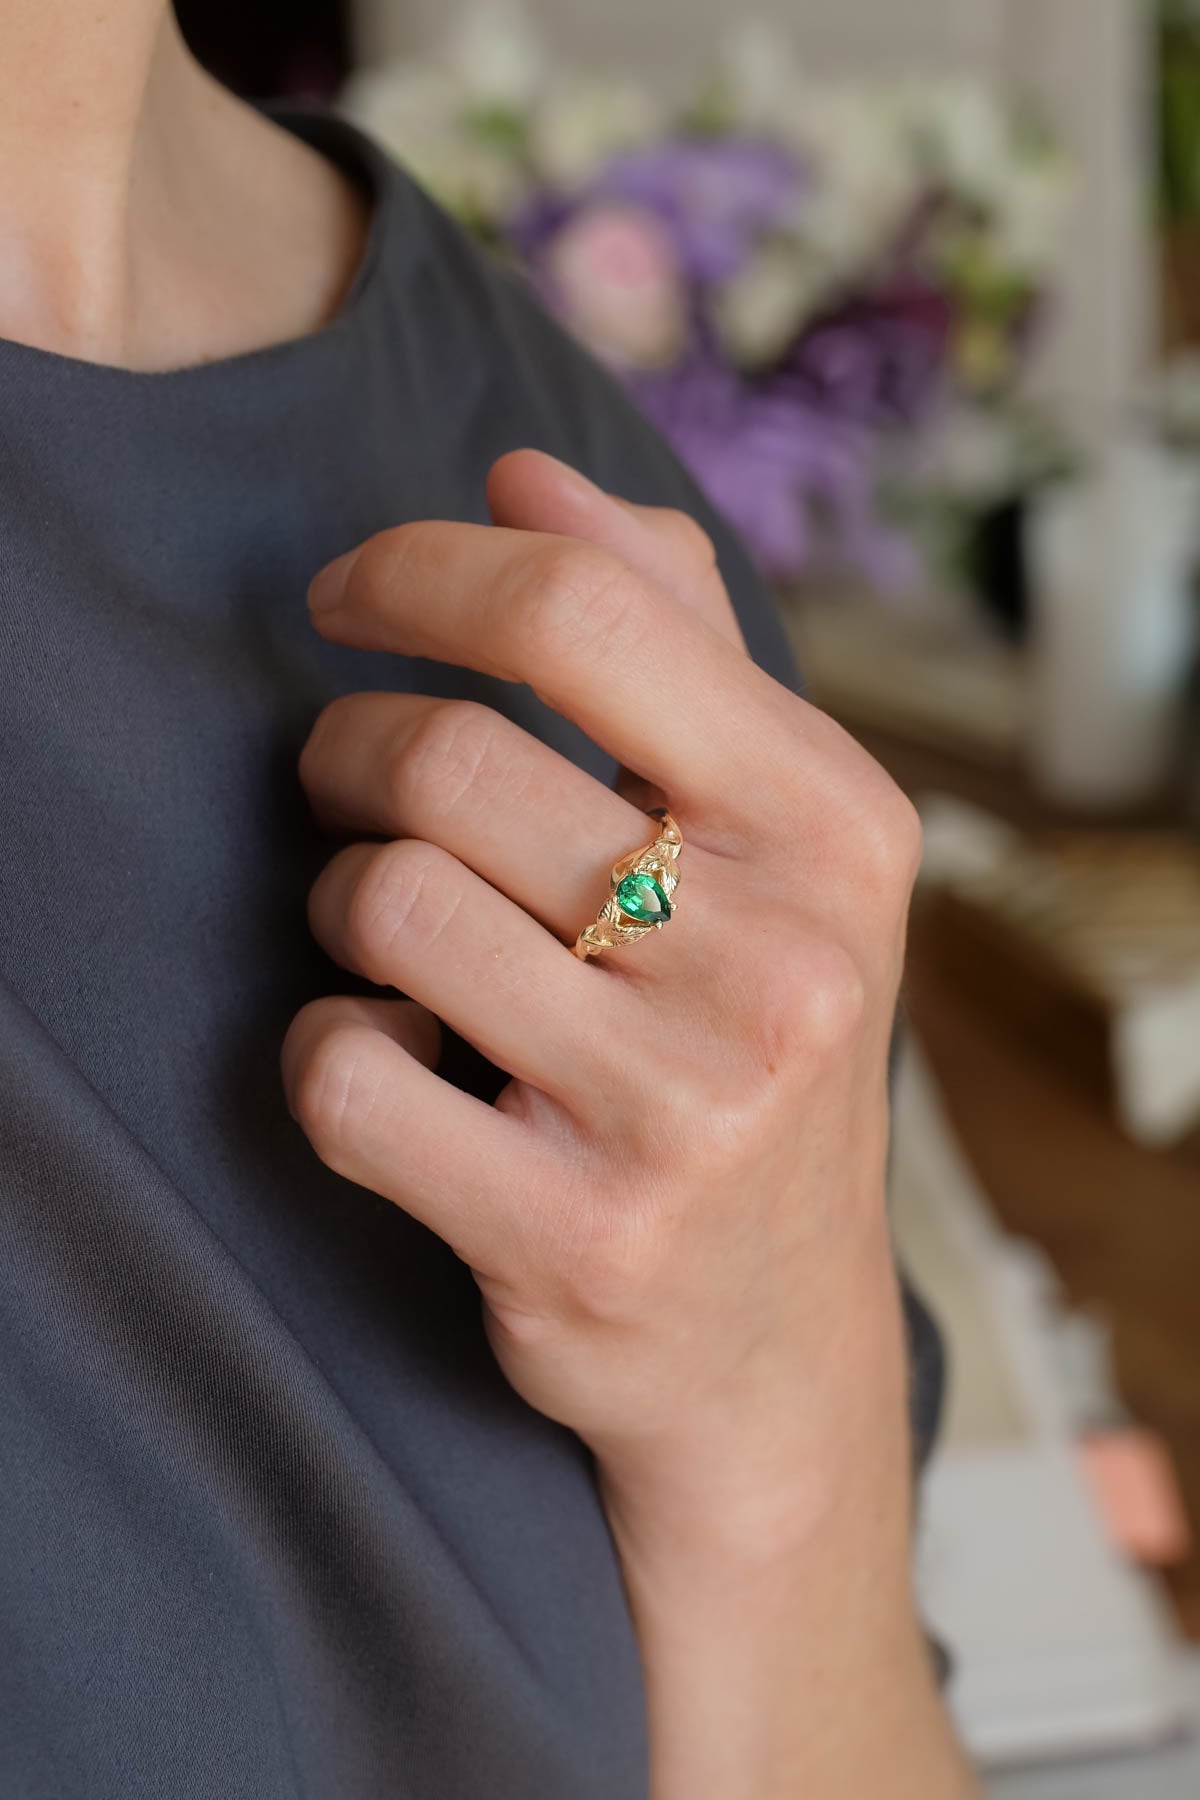 Elvish Engagement Ring with Salt and Pepper Diamond / Horta